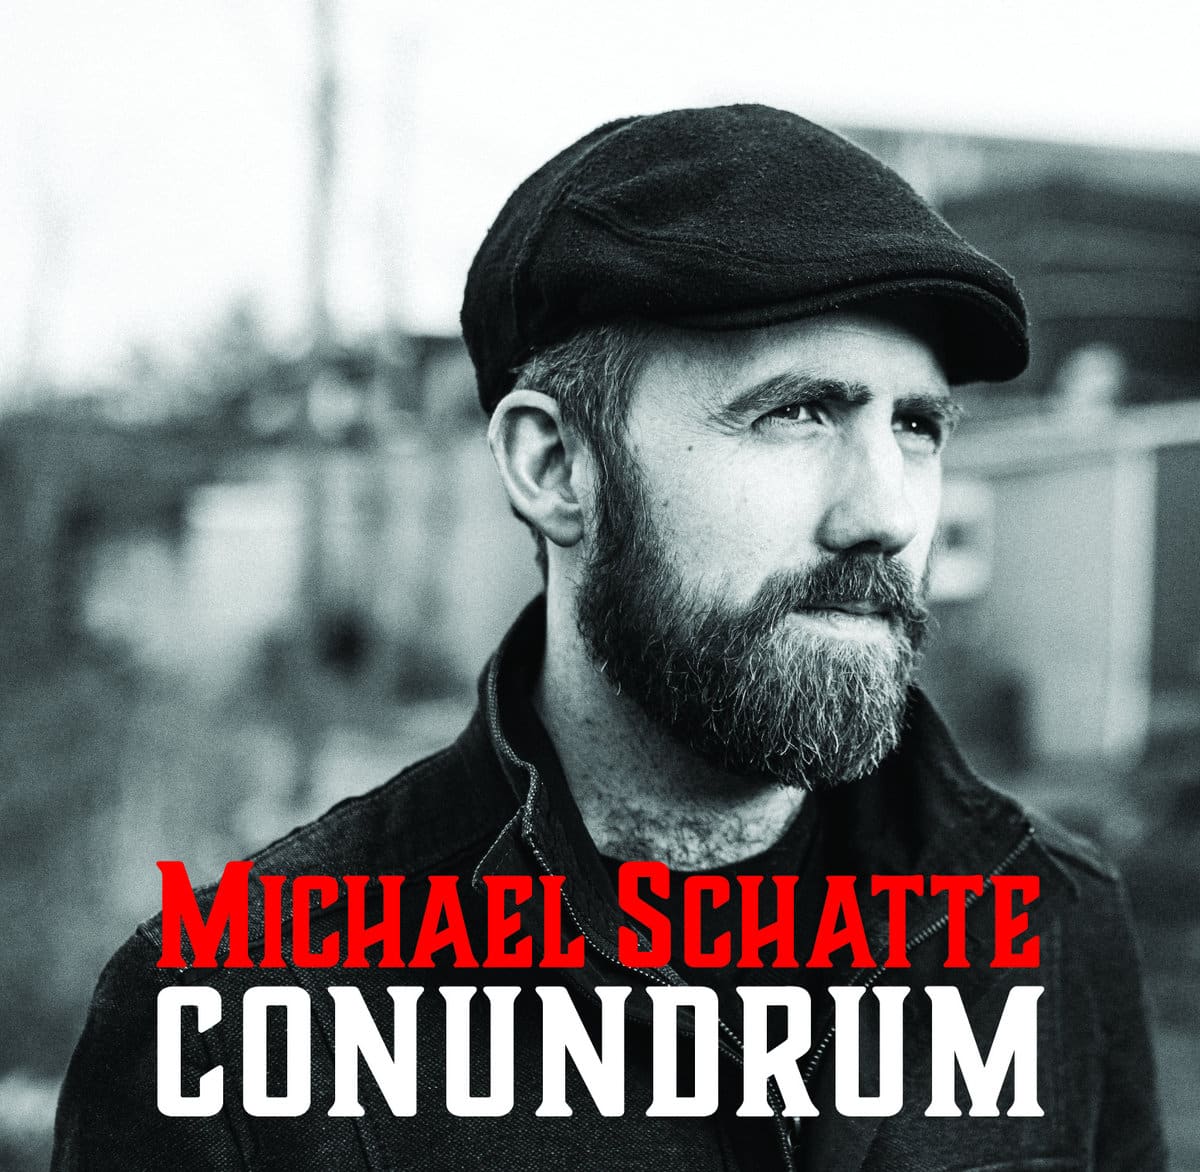 MICHAEL SCHATTE - Conundrum